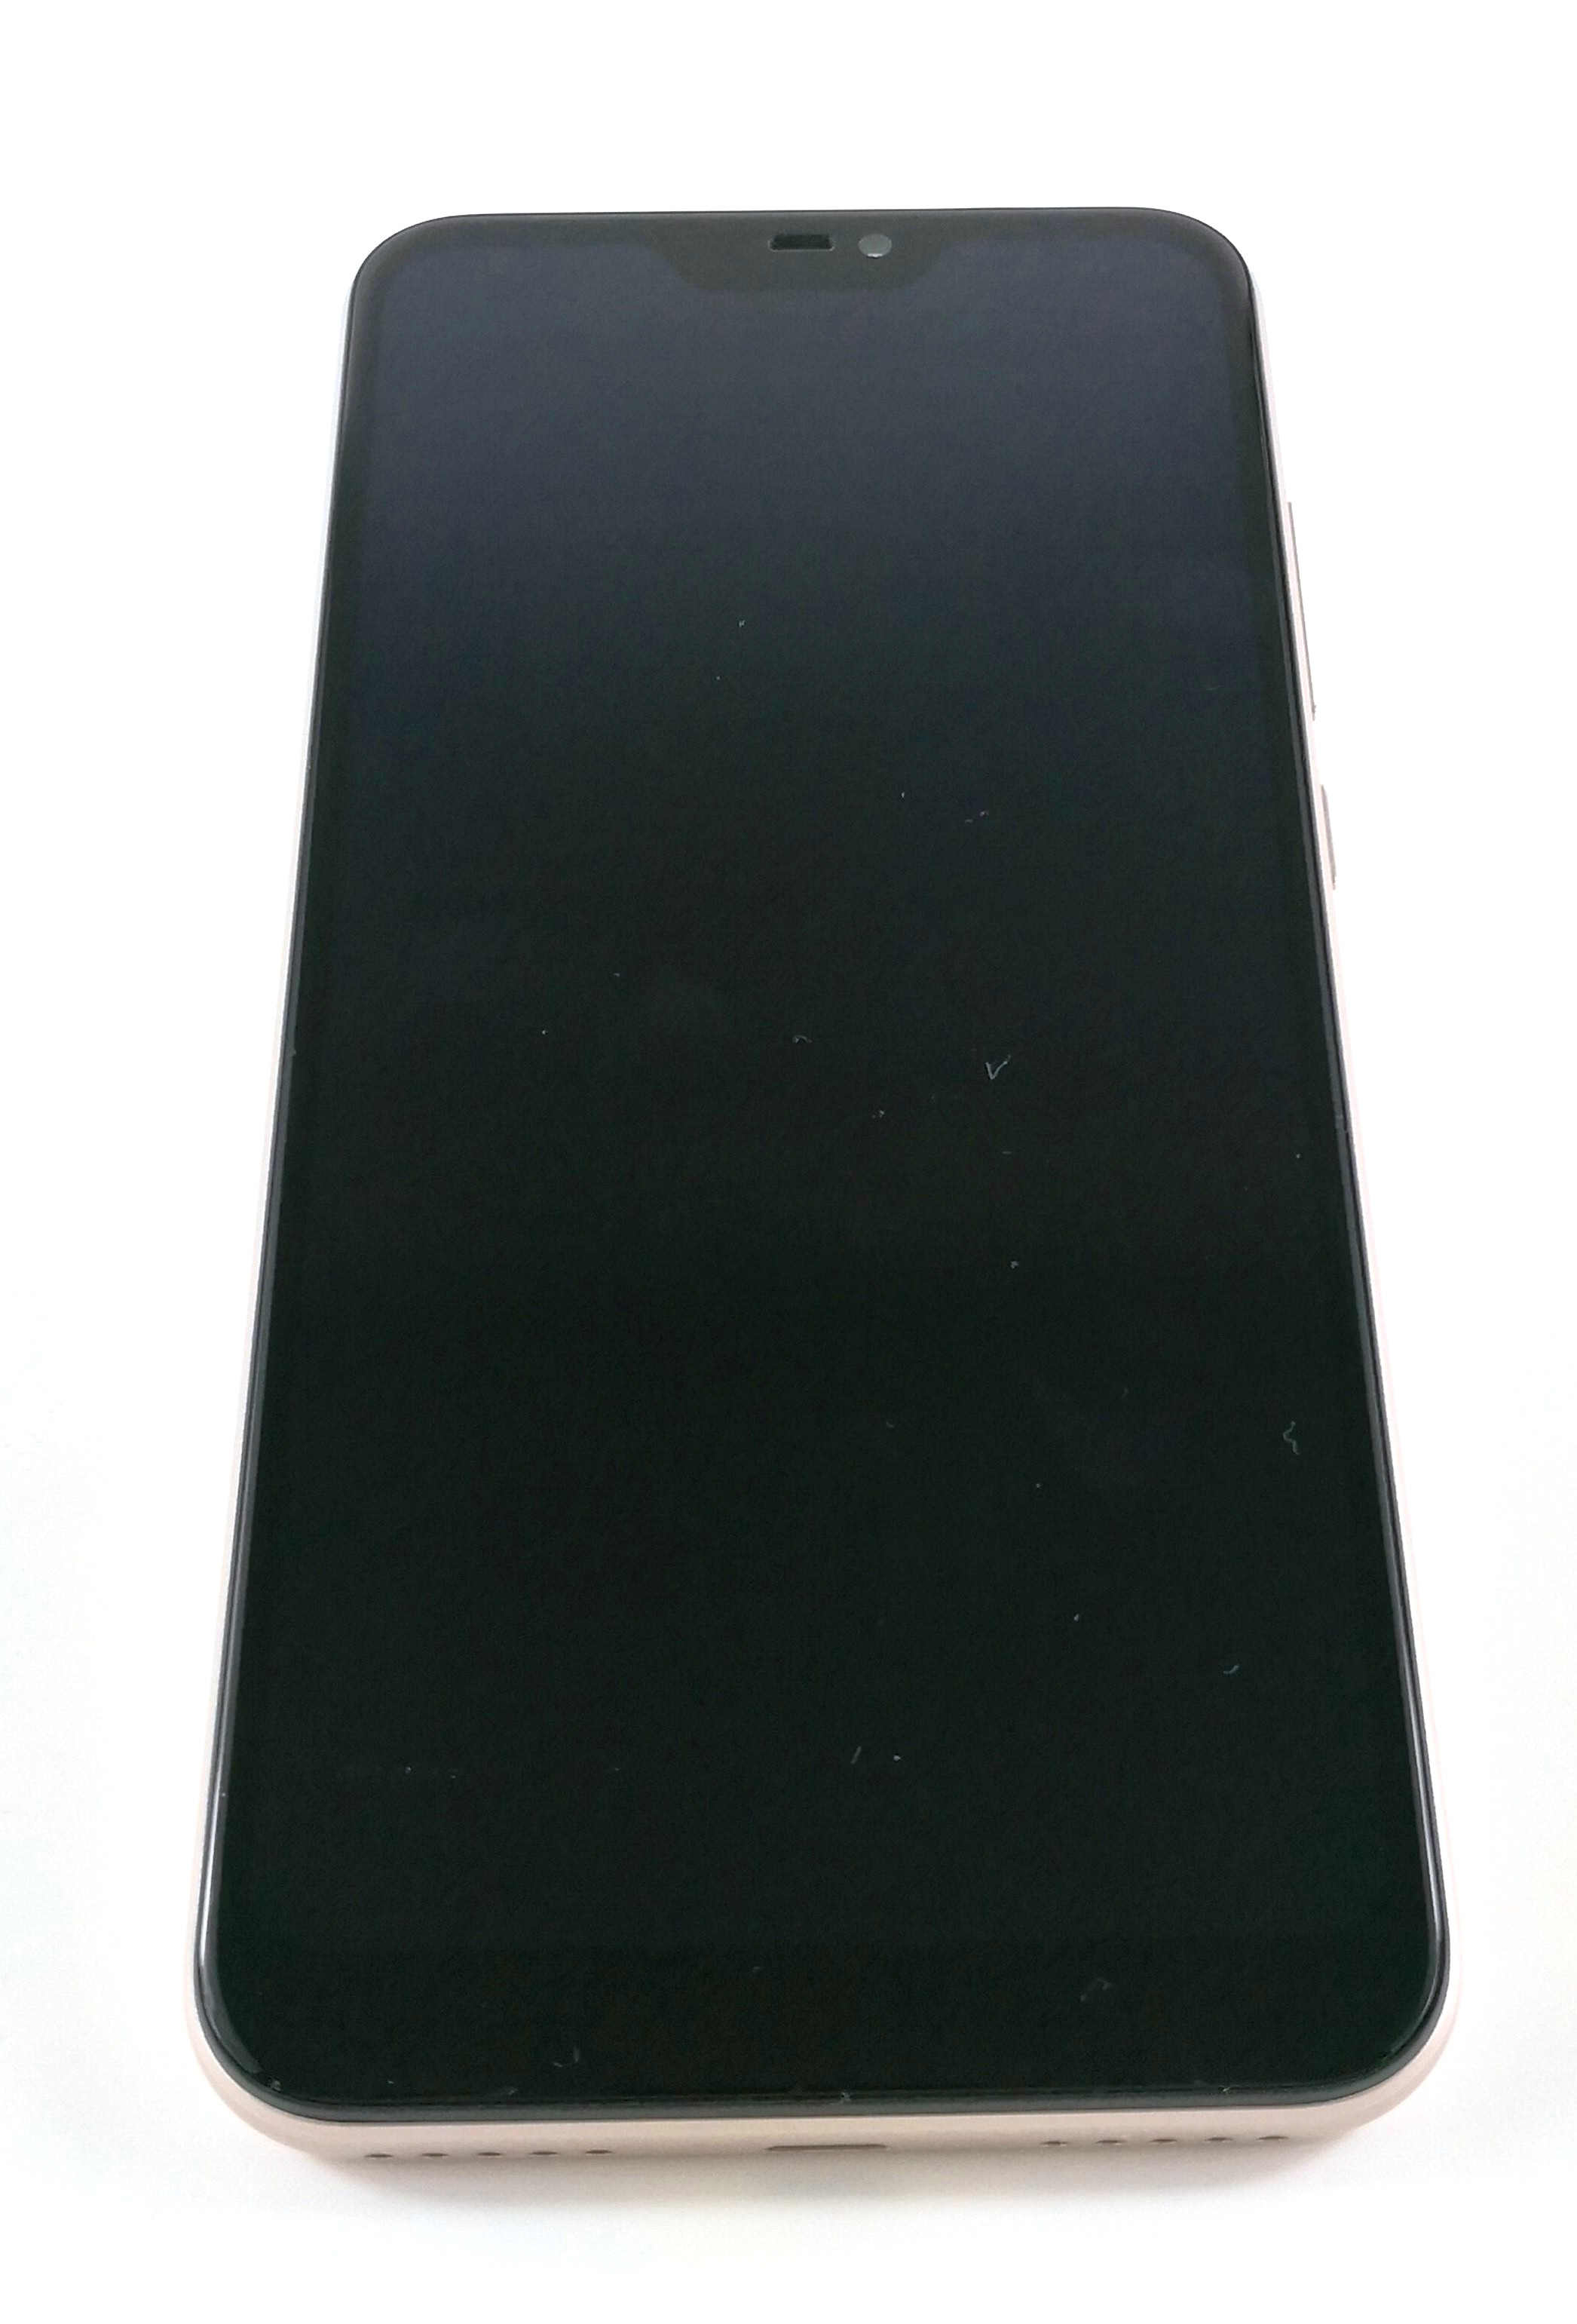 Xiaomi Redmi 6 Pro (Mi A2 Lite) Smartphone Review - NotebookCheck.net ...